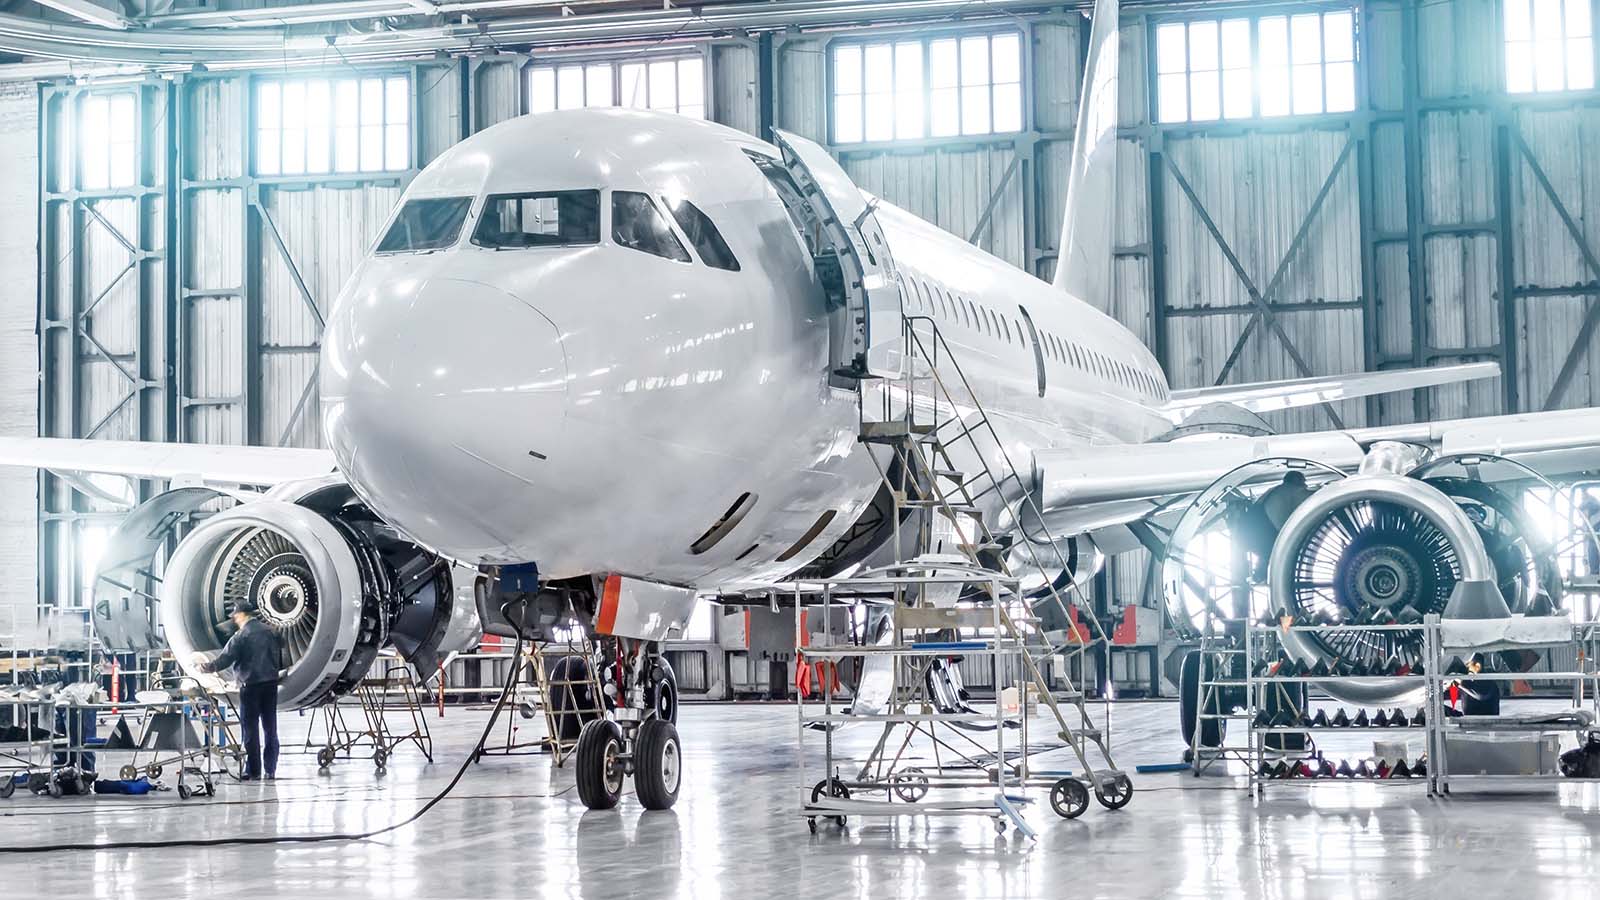 BAER Stock. a private plane inside a hangar is prepared for a flight. represent aerospace stocks